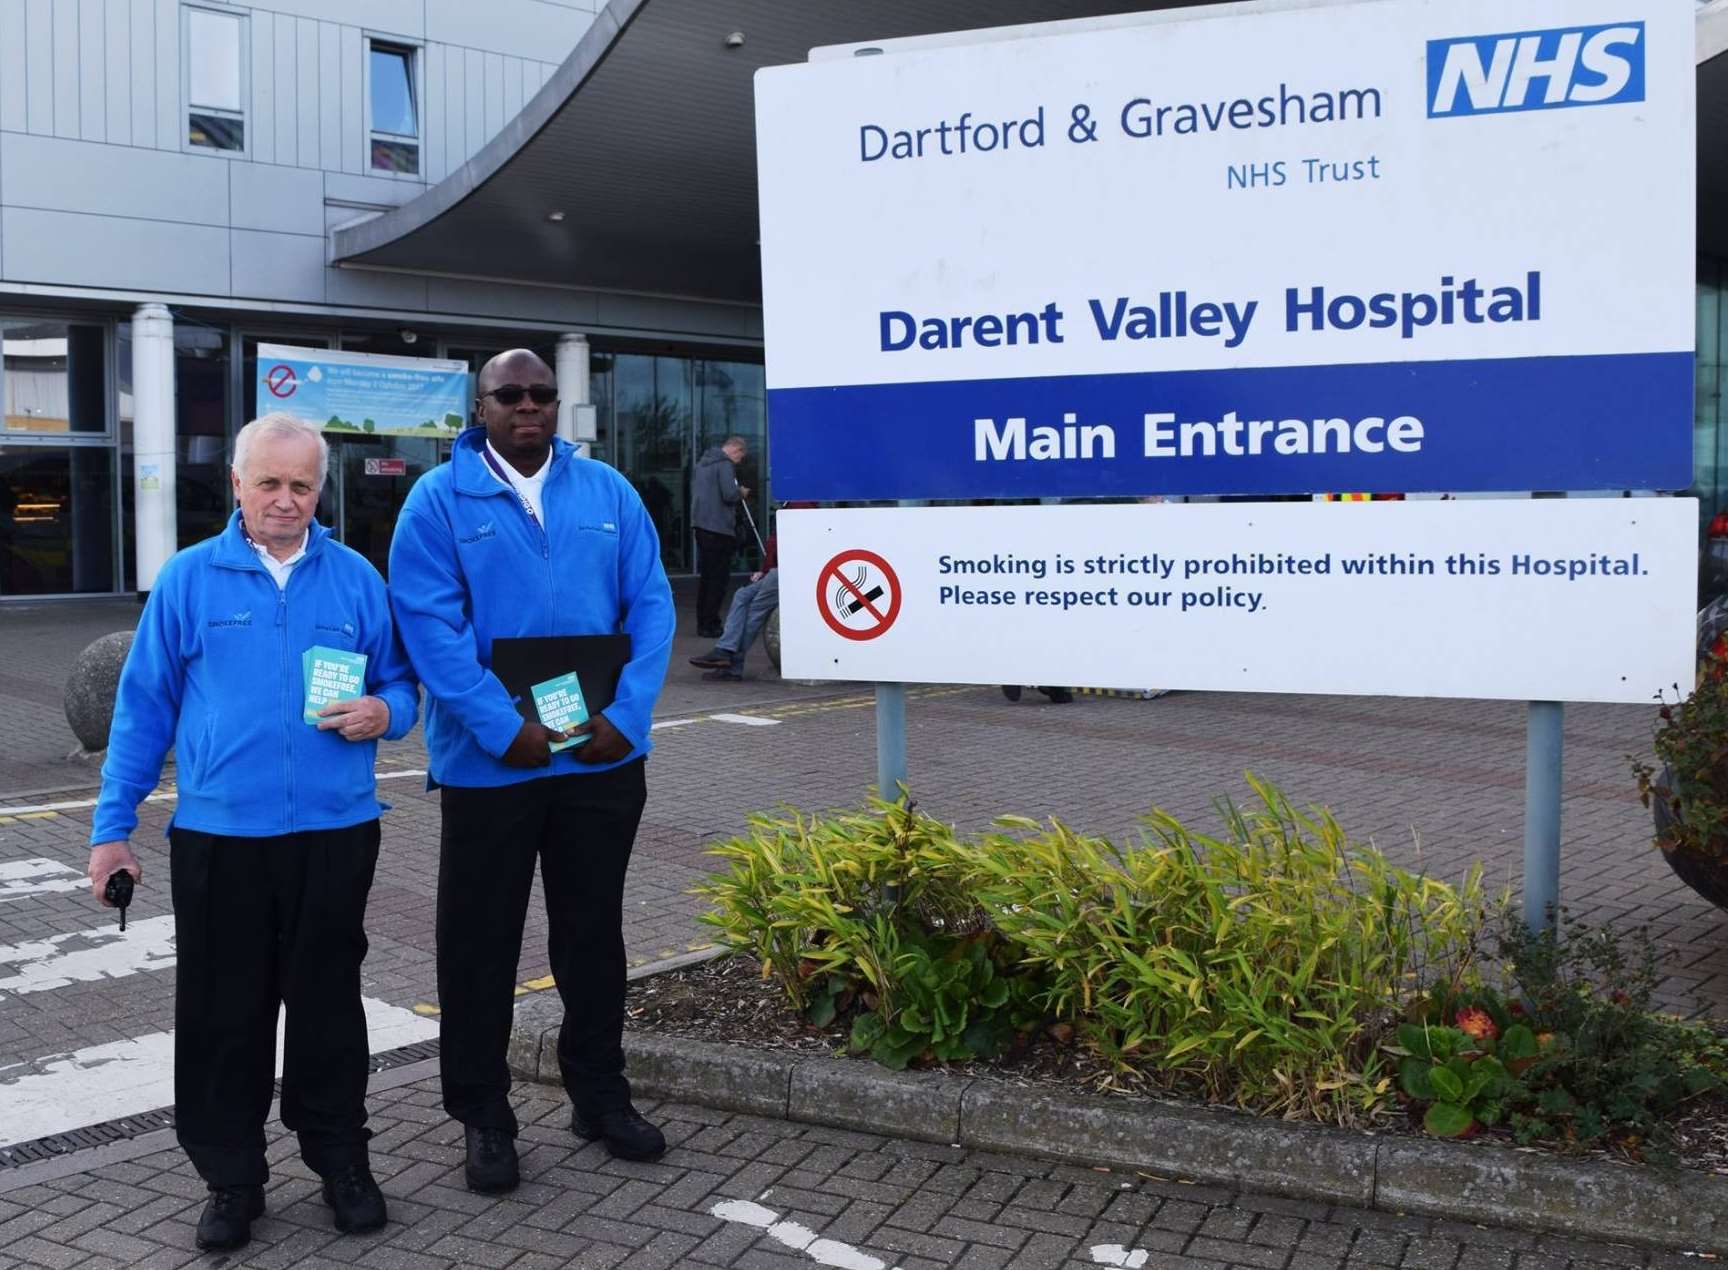 Wardens Bob and Charles on patrol at Darent Valley Hospital